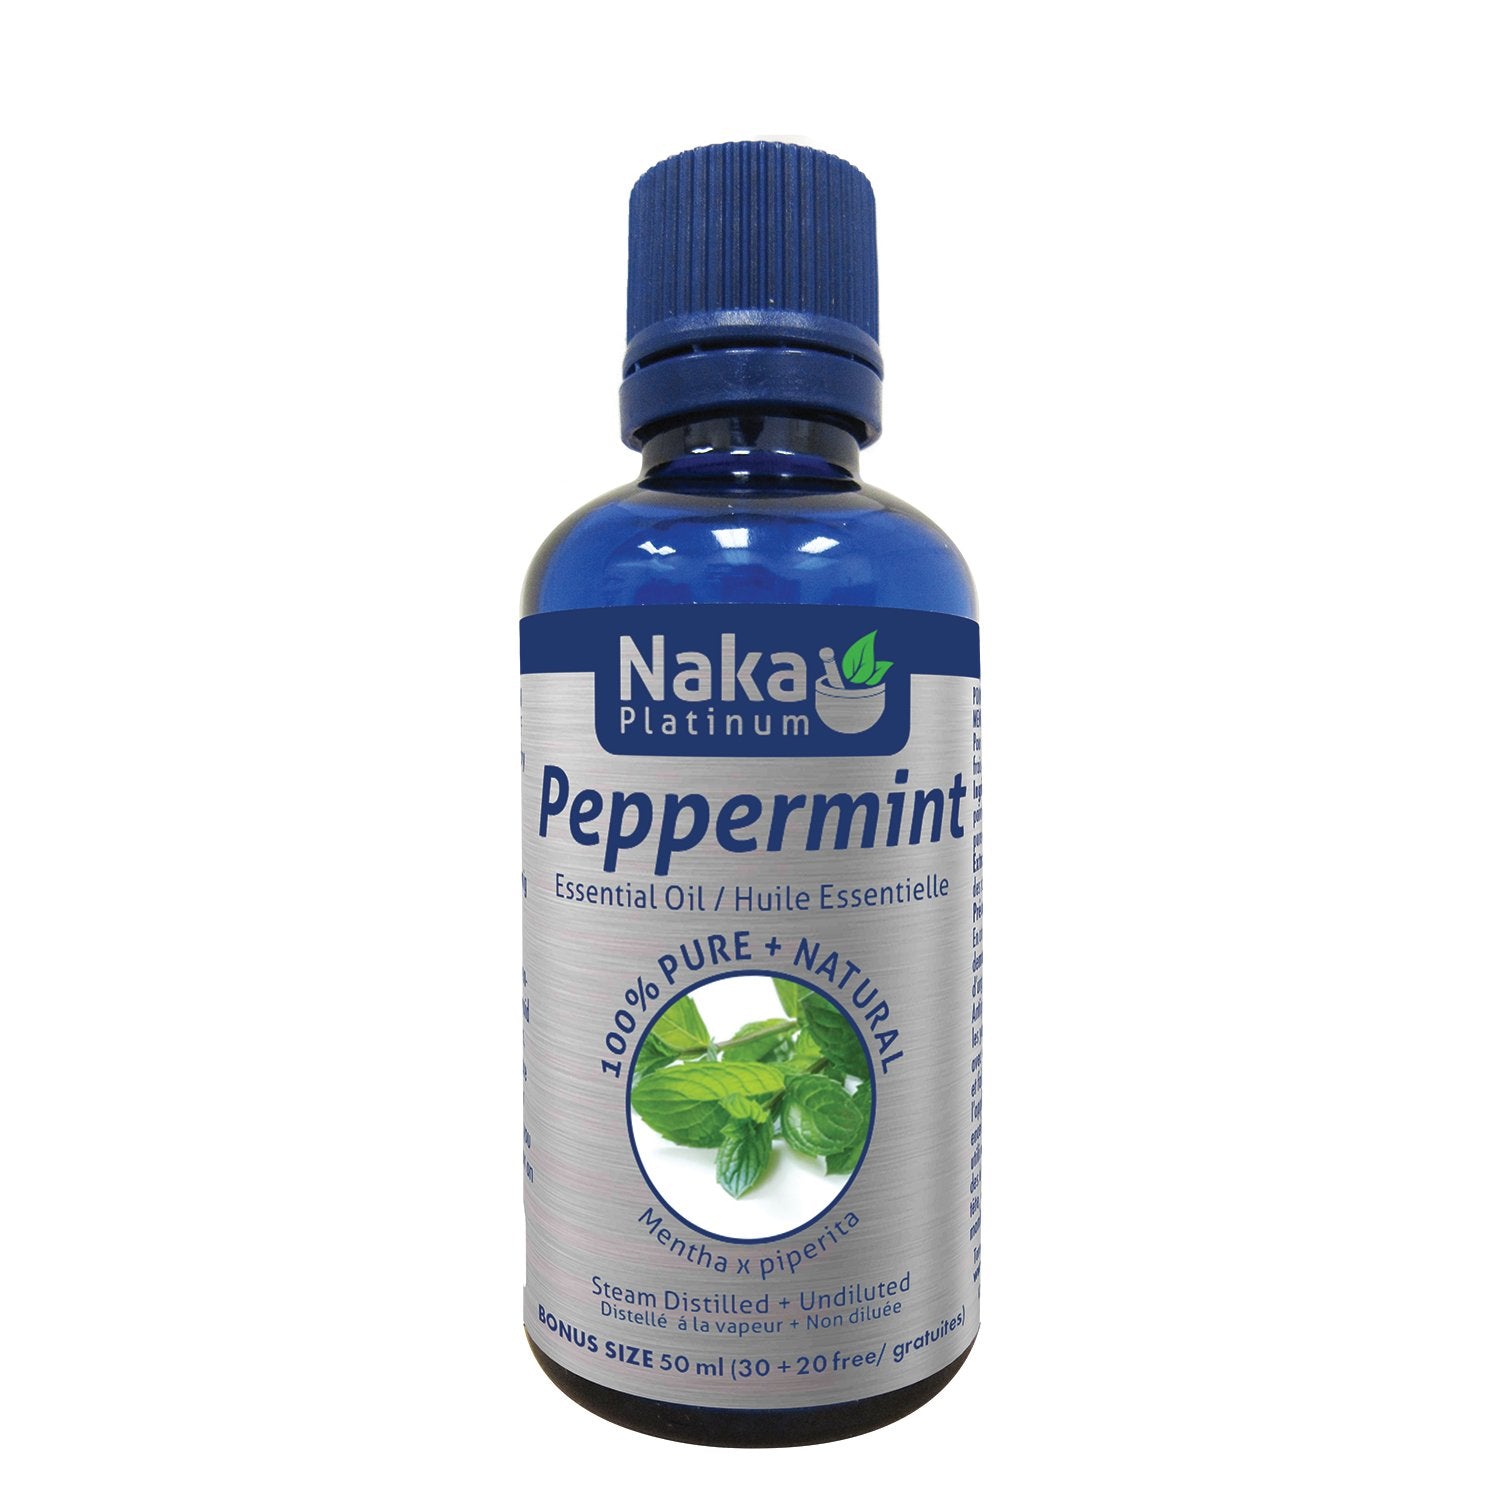 Naka Platinum Peppermint Essential Oil 50ml Bonus Size